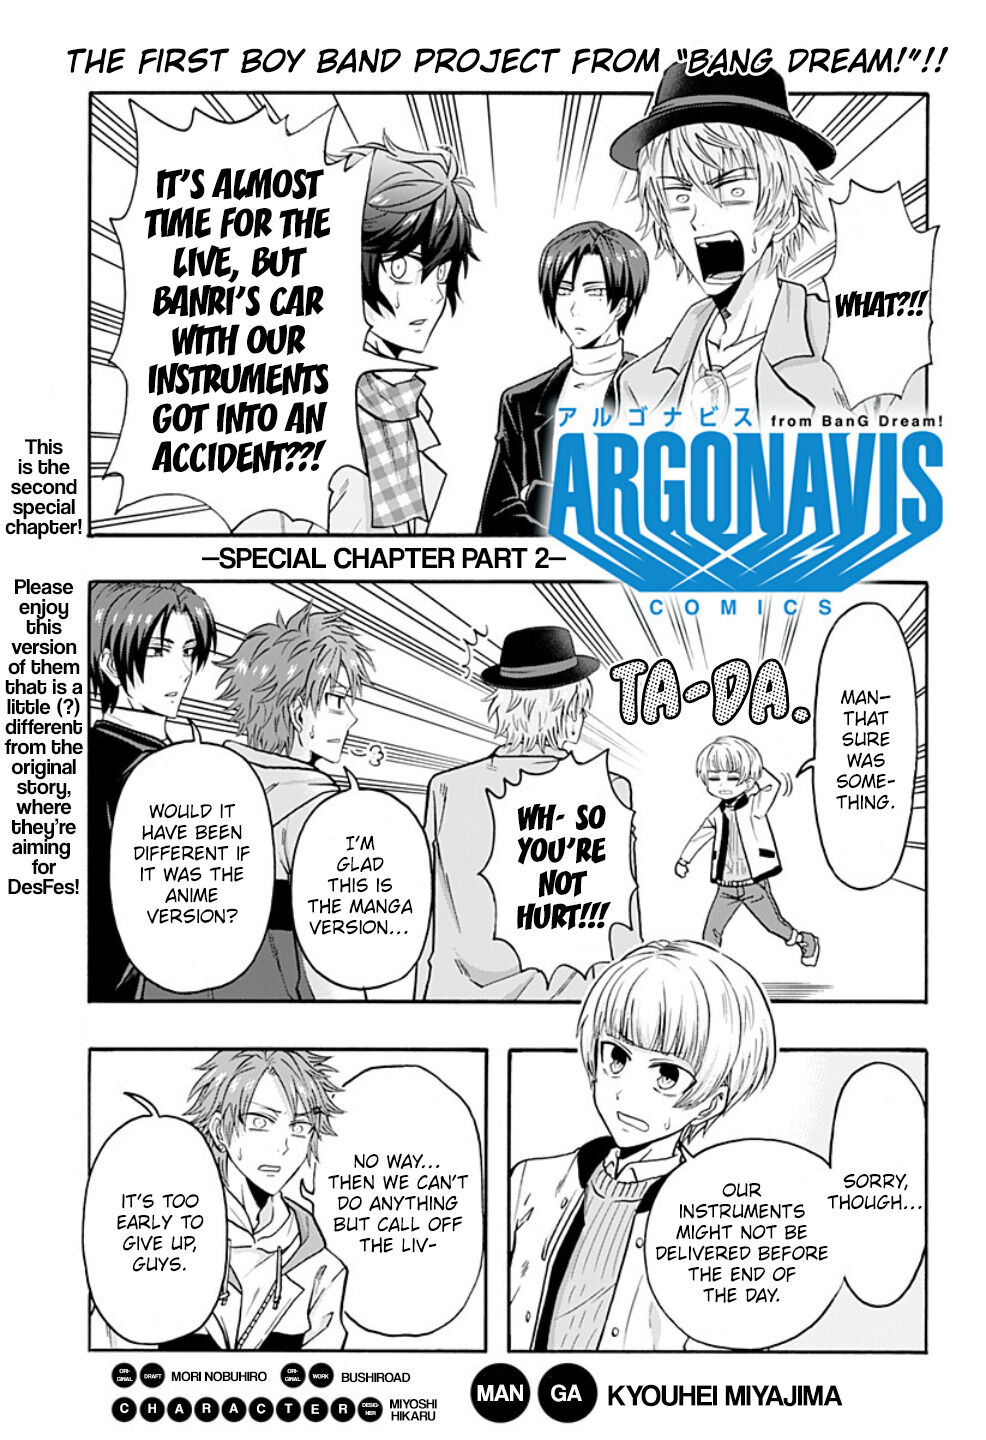 Argonavis From Bang Dream! Comics - Page 1